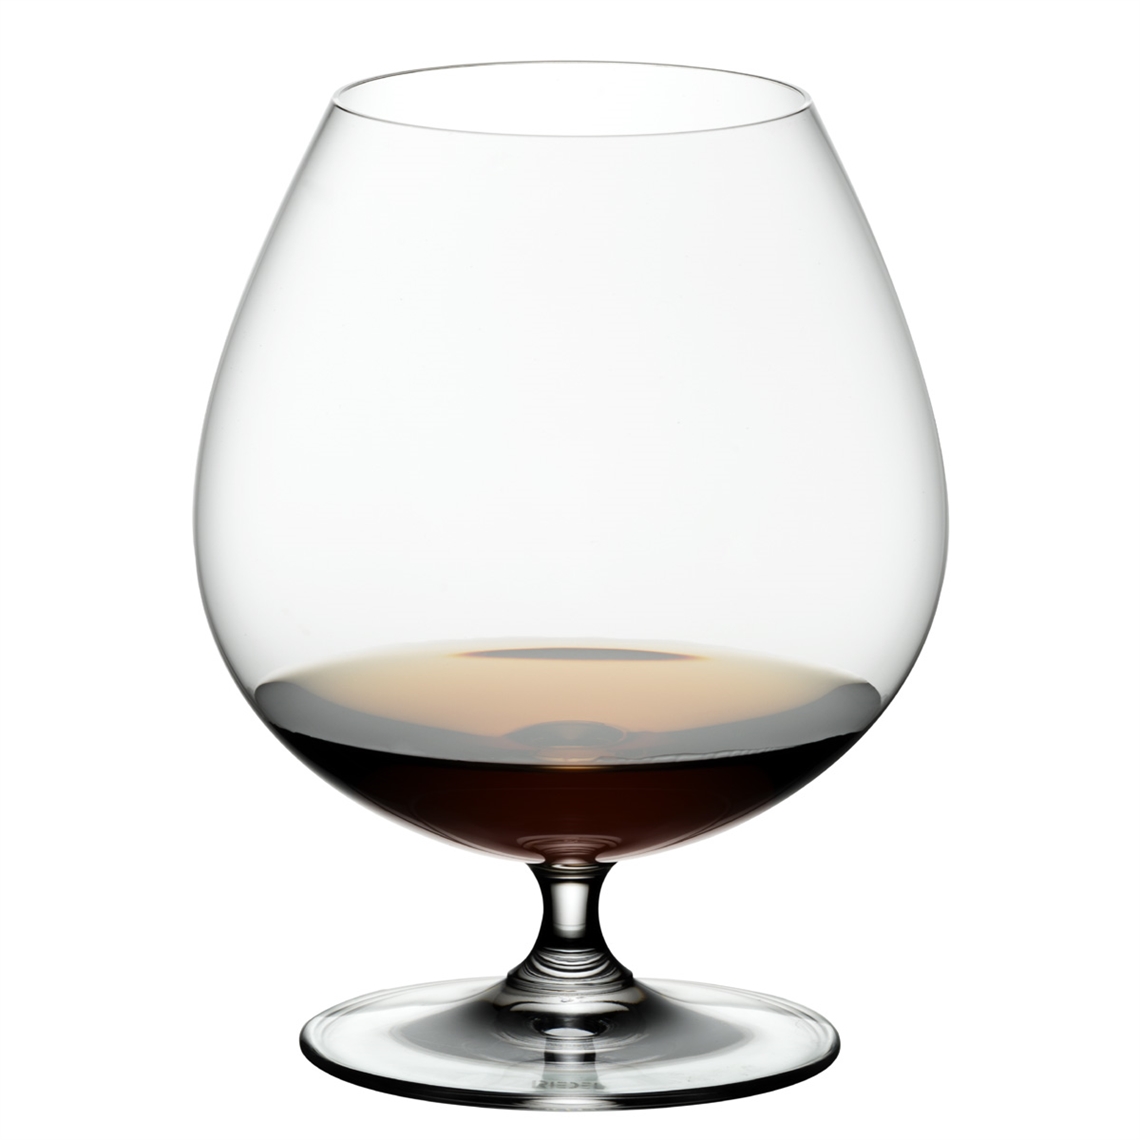 View more whisky glasses from our Spirit Glasses range